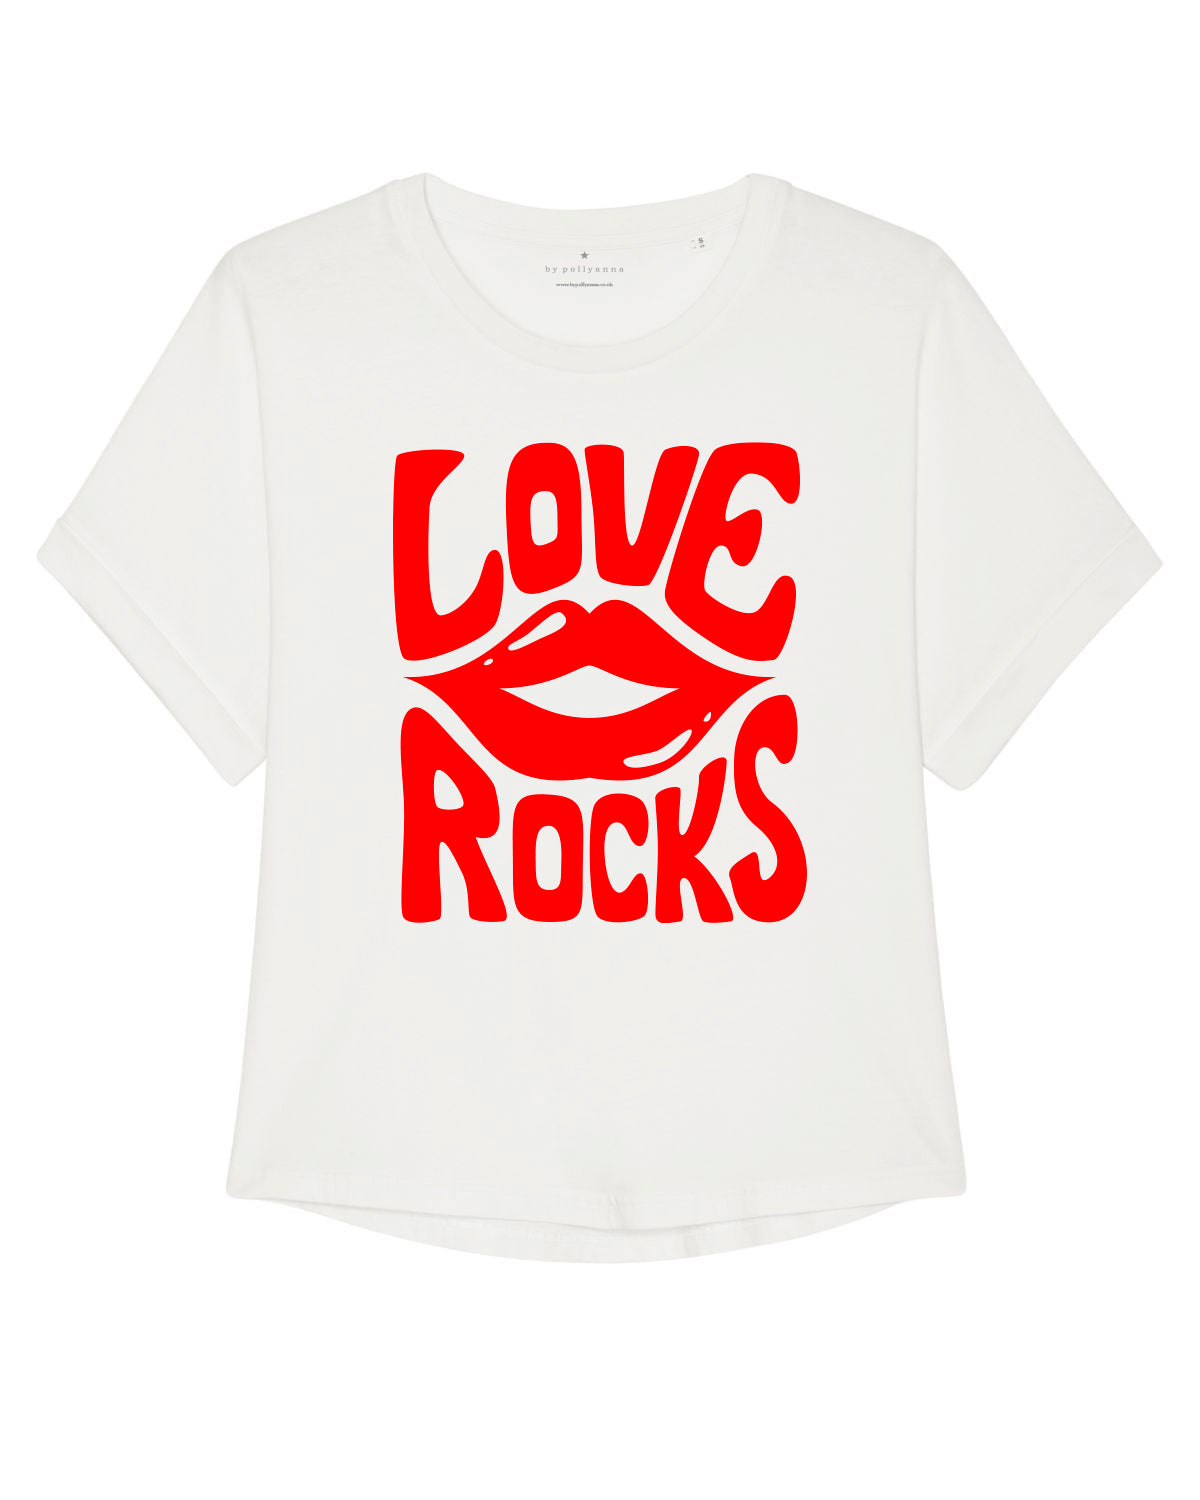 ❤️ Love Rocks Tee - Boxy Fit